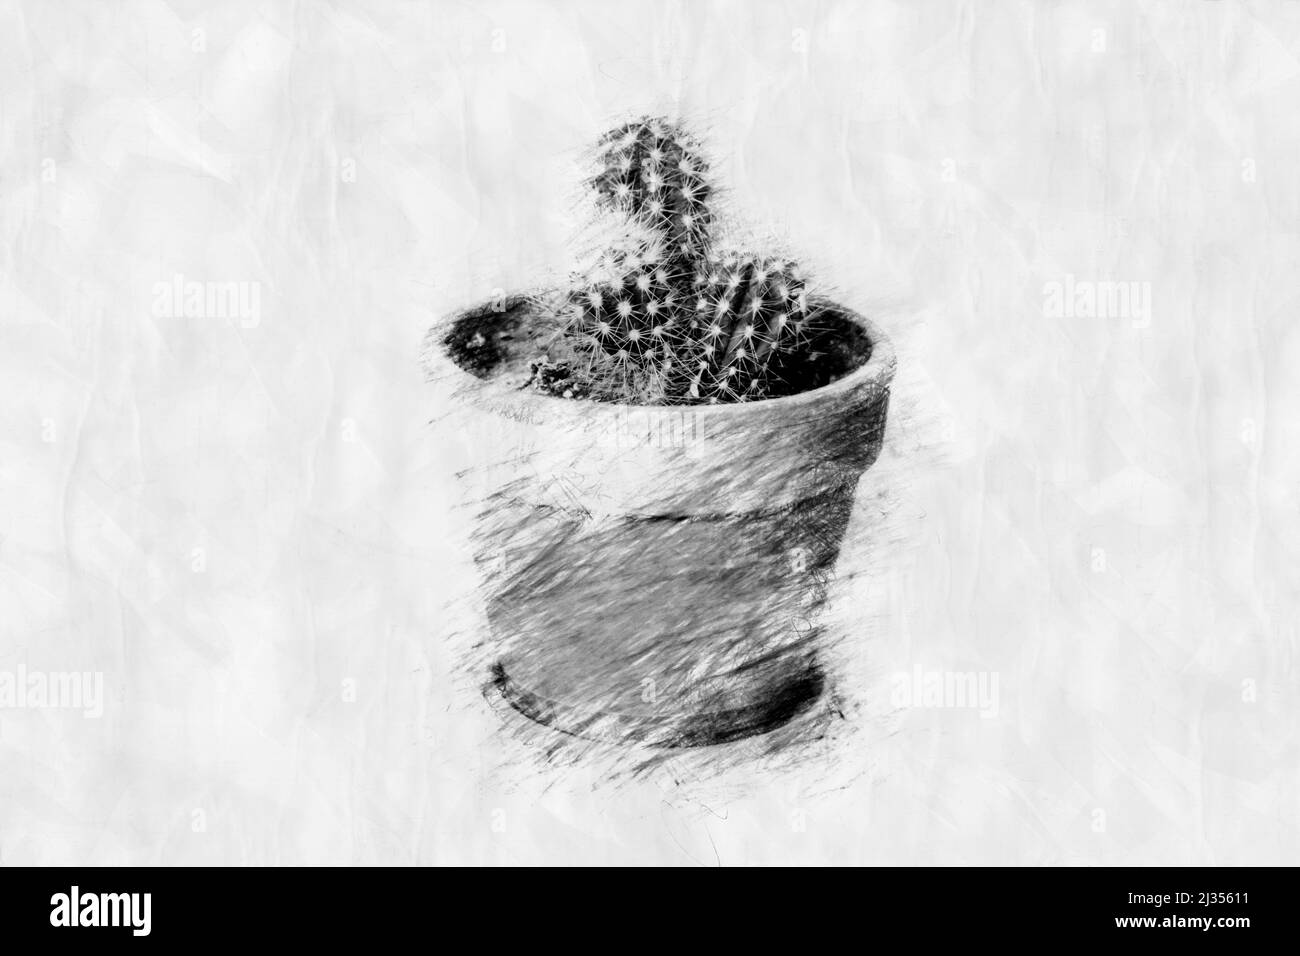 Drawings - Pencil sketch # illusion # flower pot | Facebook